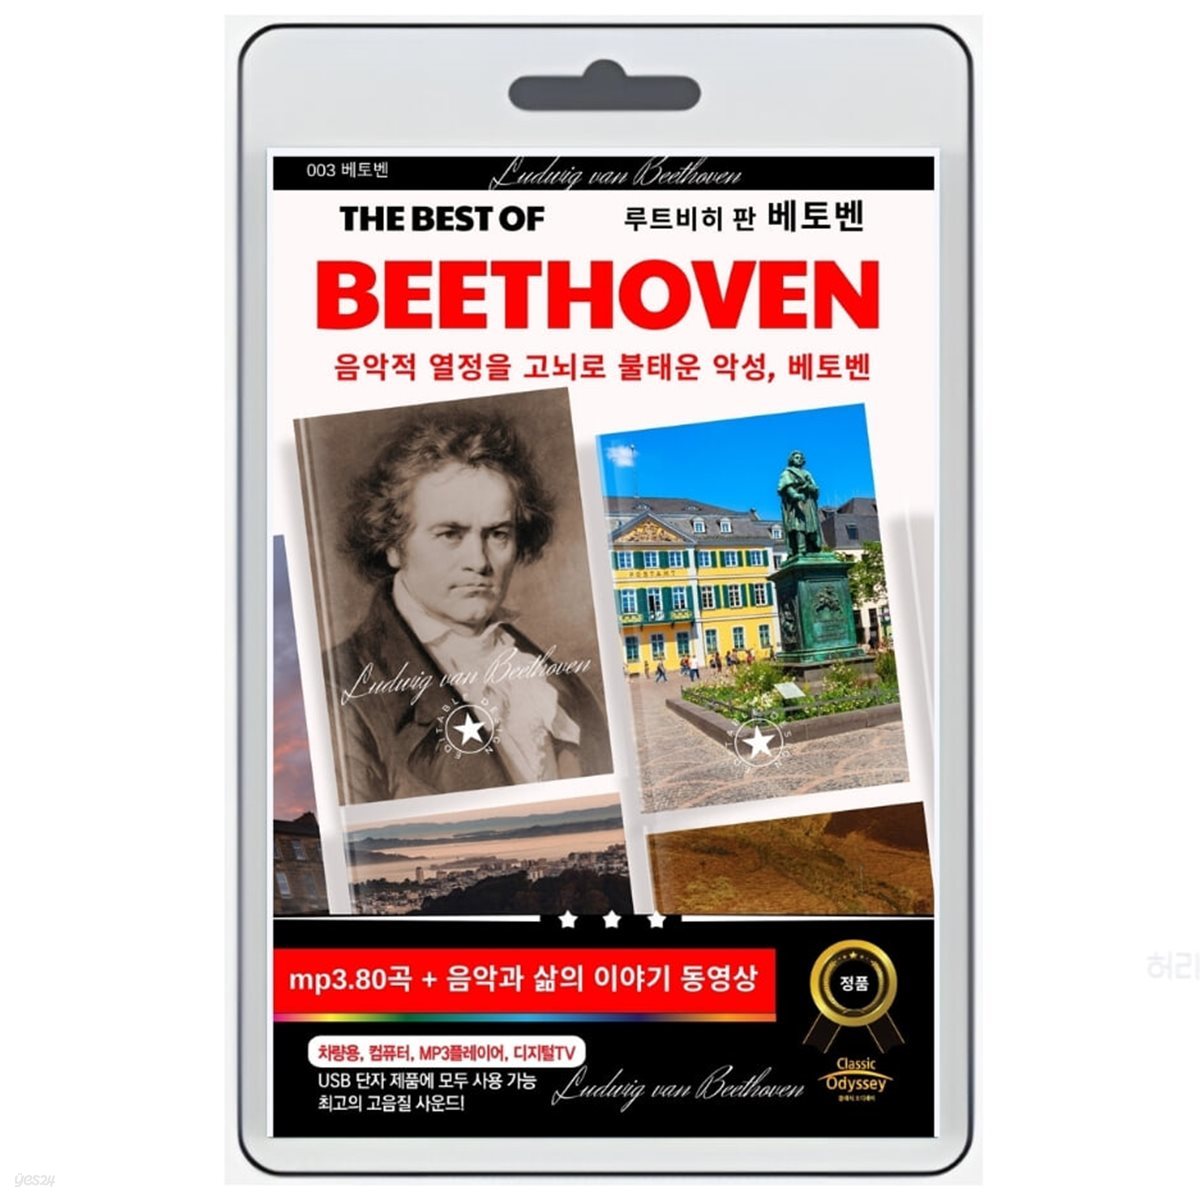 [USB] 루트비히 판 베토벤 (Ludwig van Beethoven) 베스트 - 음악과 삶의 이야기